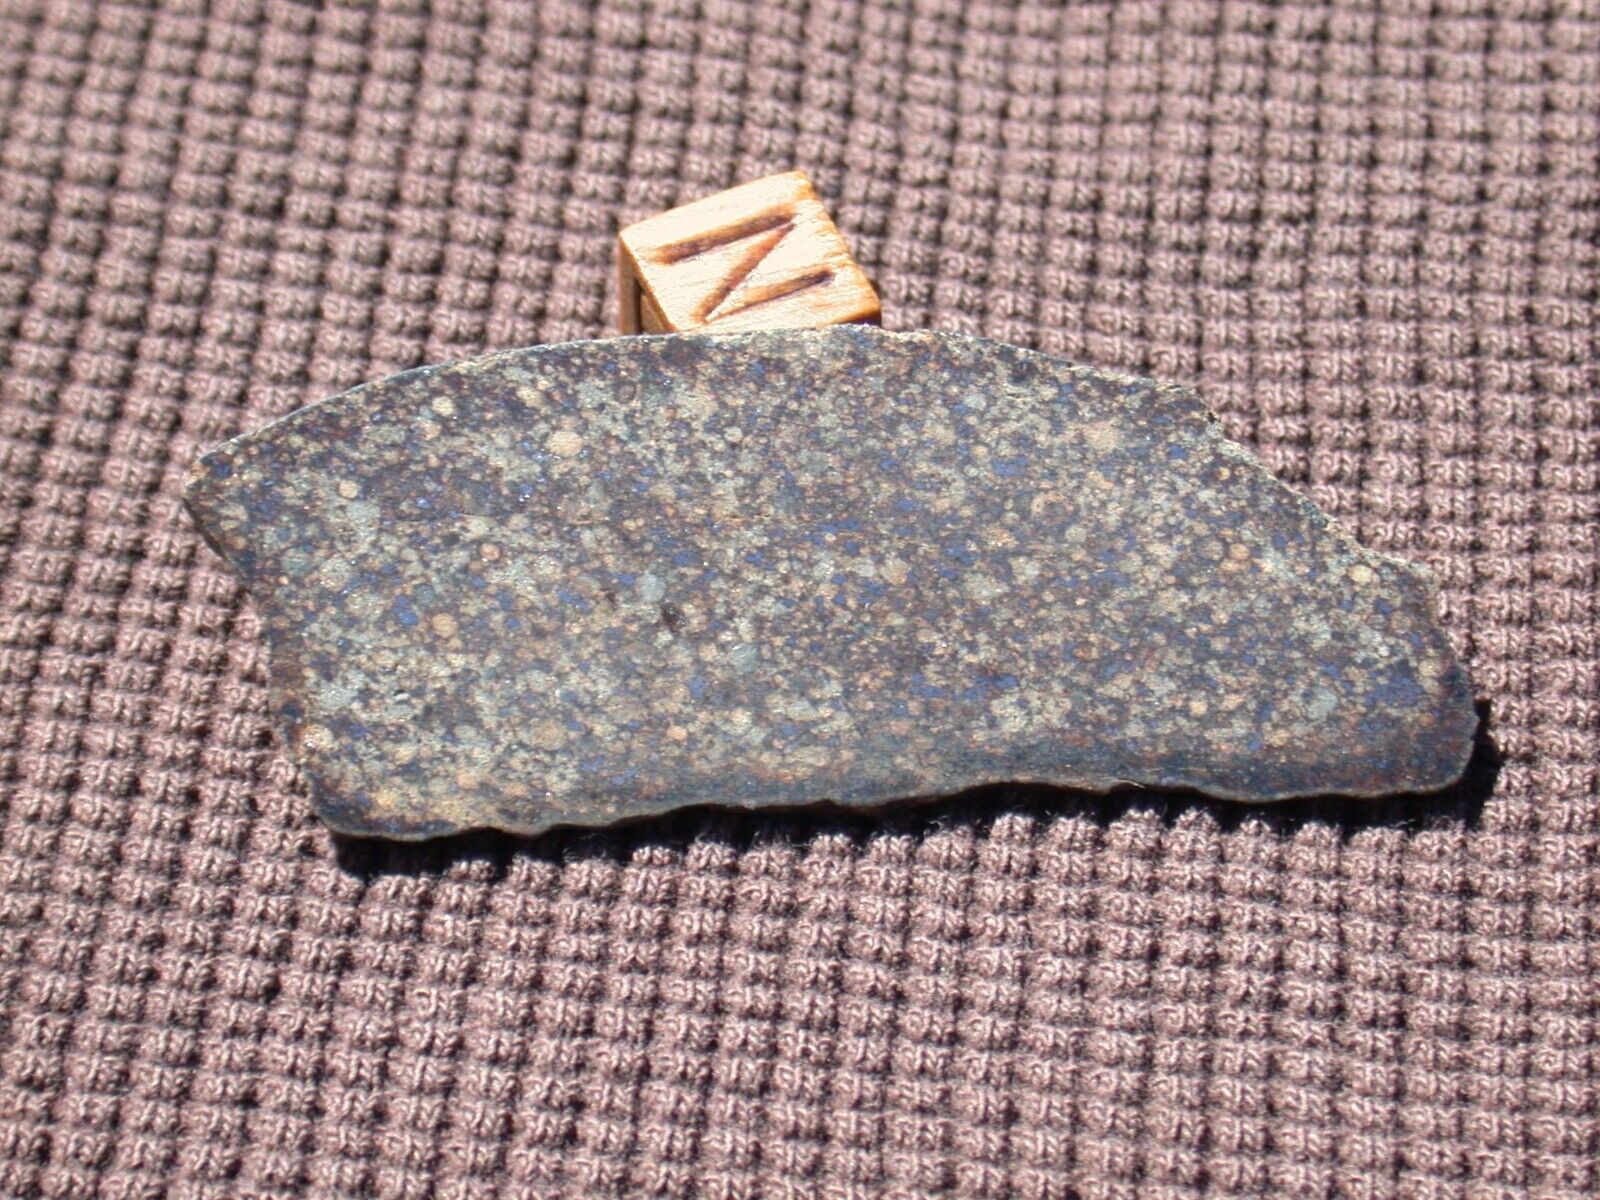 NWA 13447 (H3) - 7.0 gram meteorite slice - ARMOURED CHONDRULES 